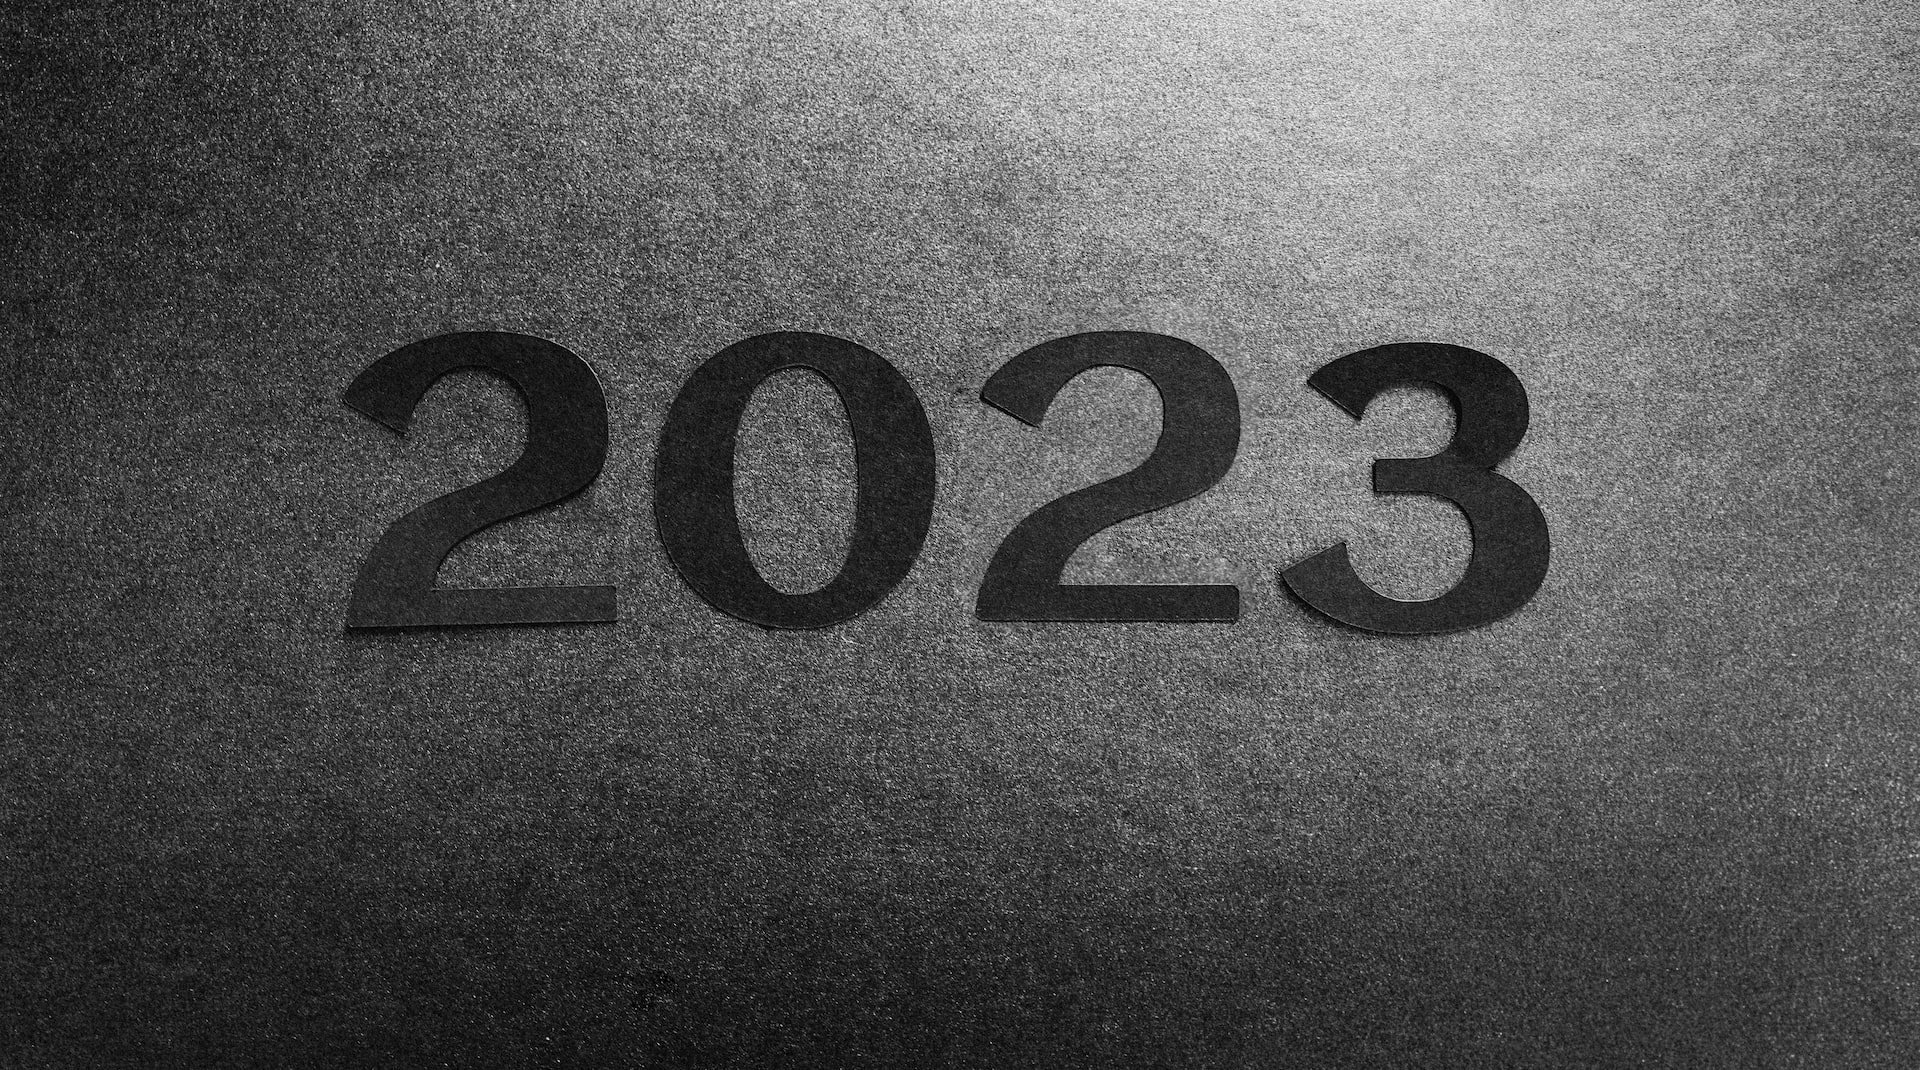 2023 predictions: the desires of man